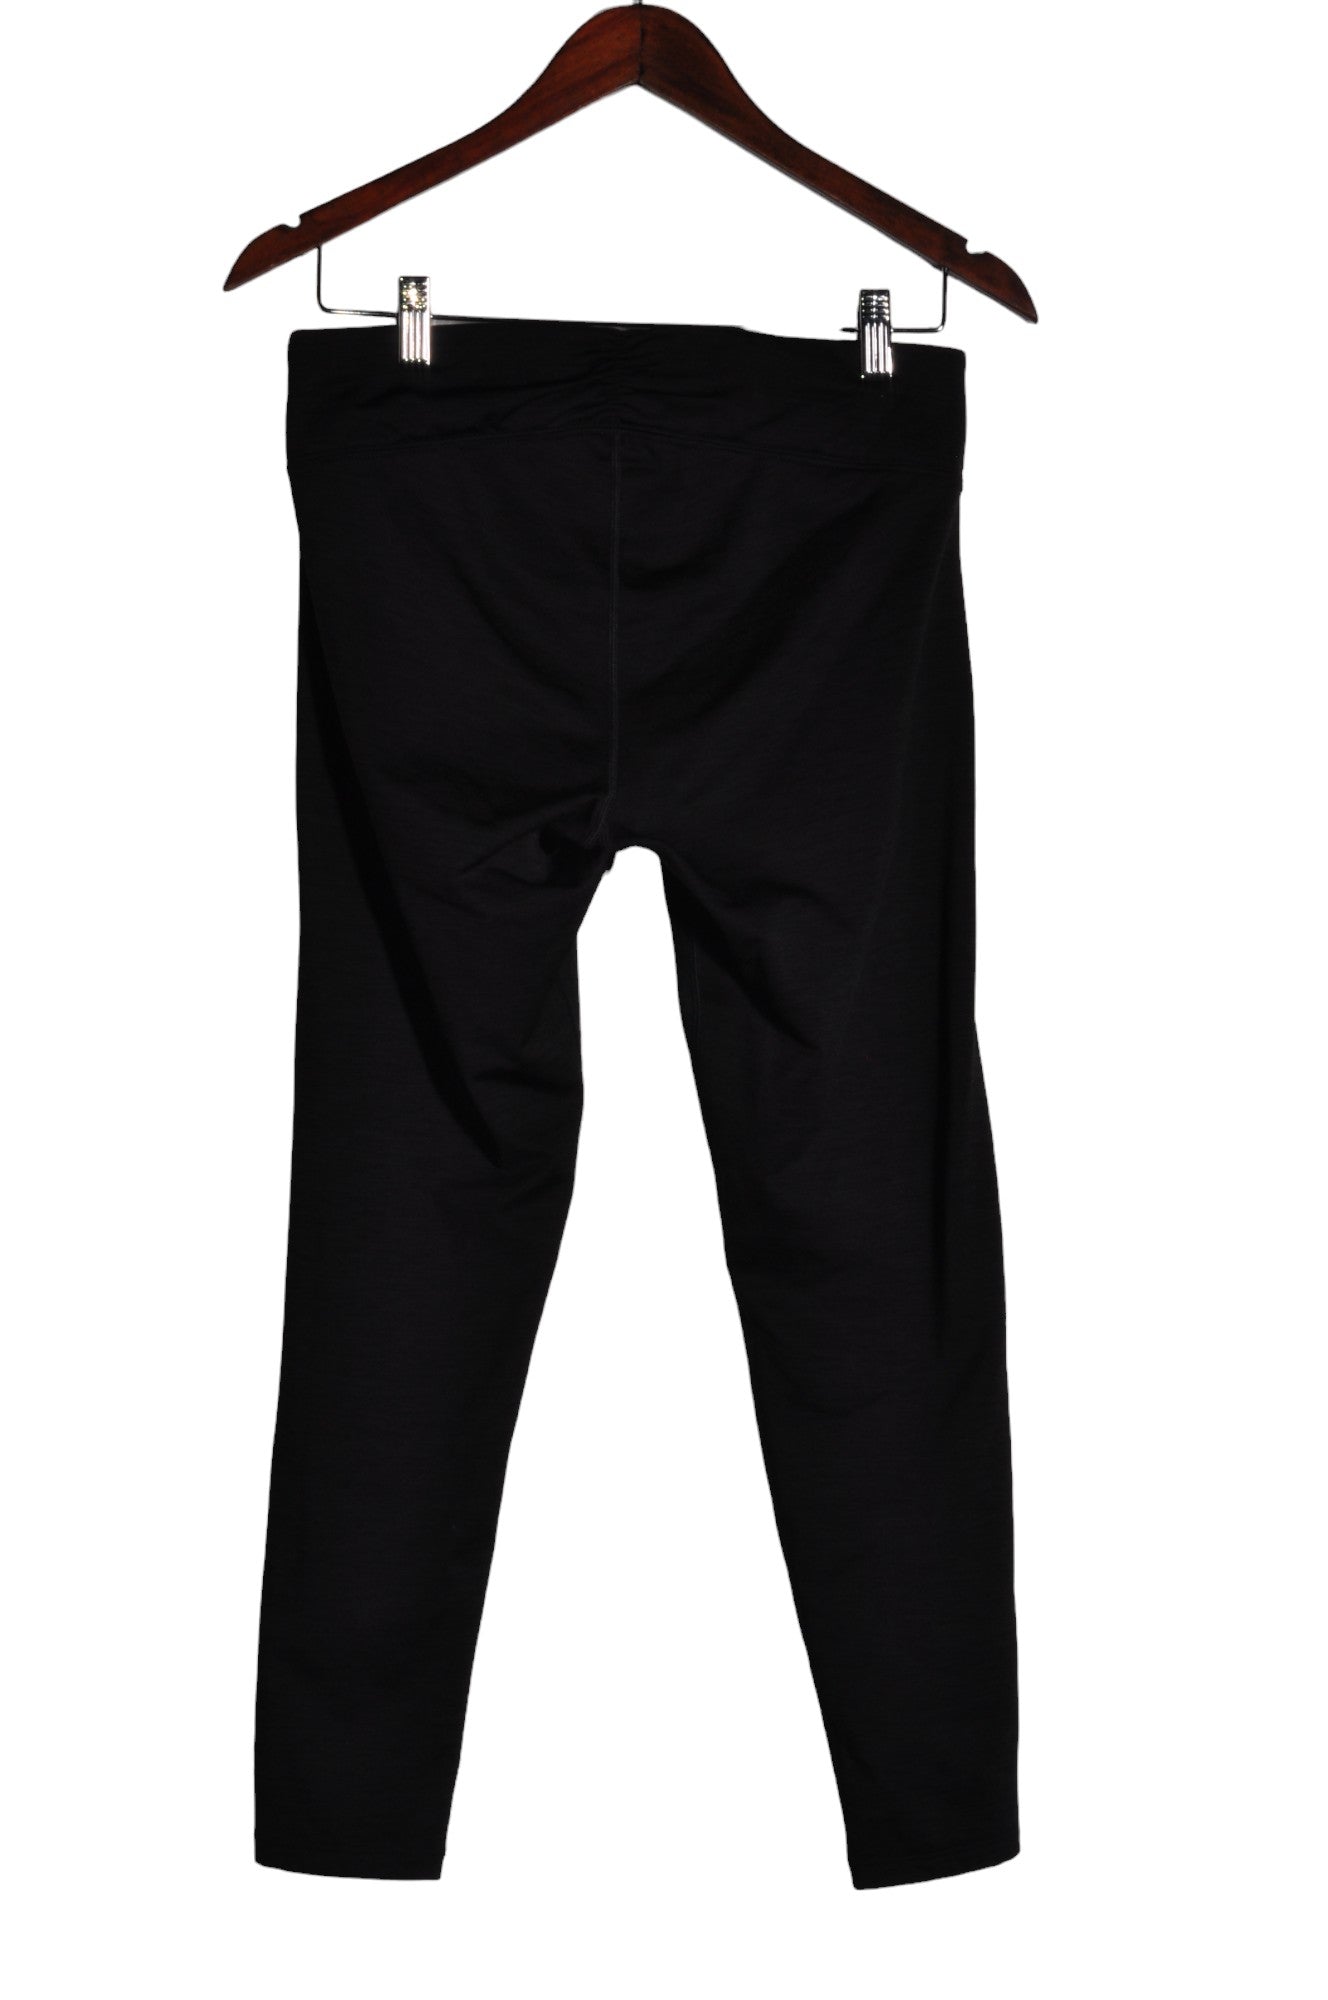 MARC NEW YORK Women Activewear Leggings Regular fit in Black - Size M | 27.98 $ KOOP